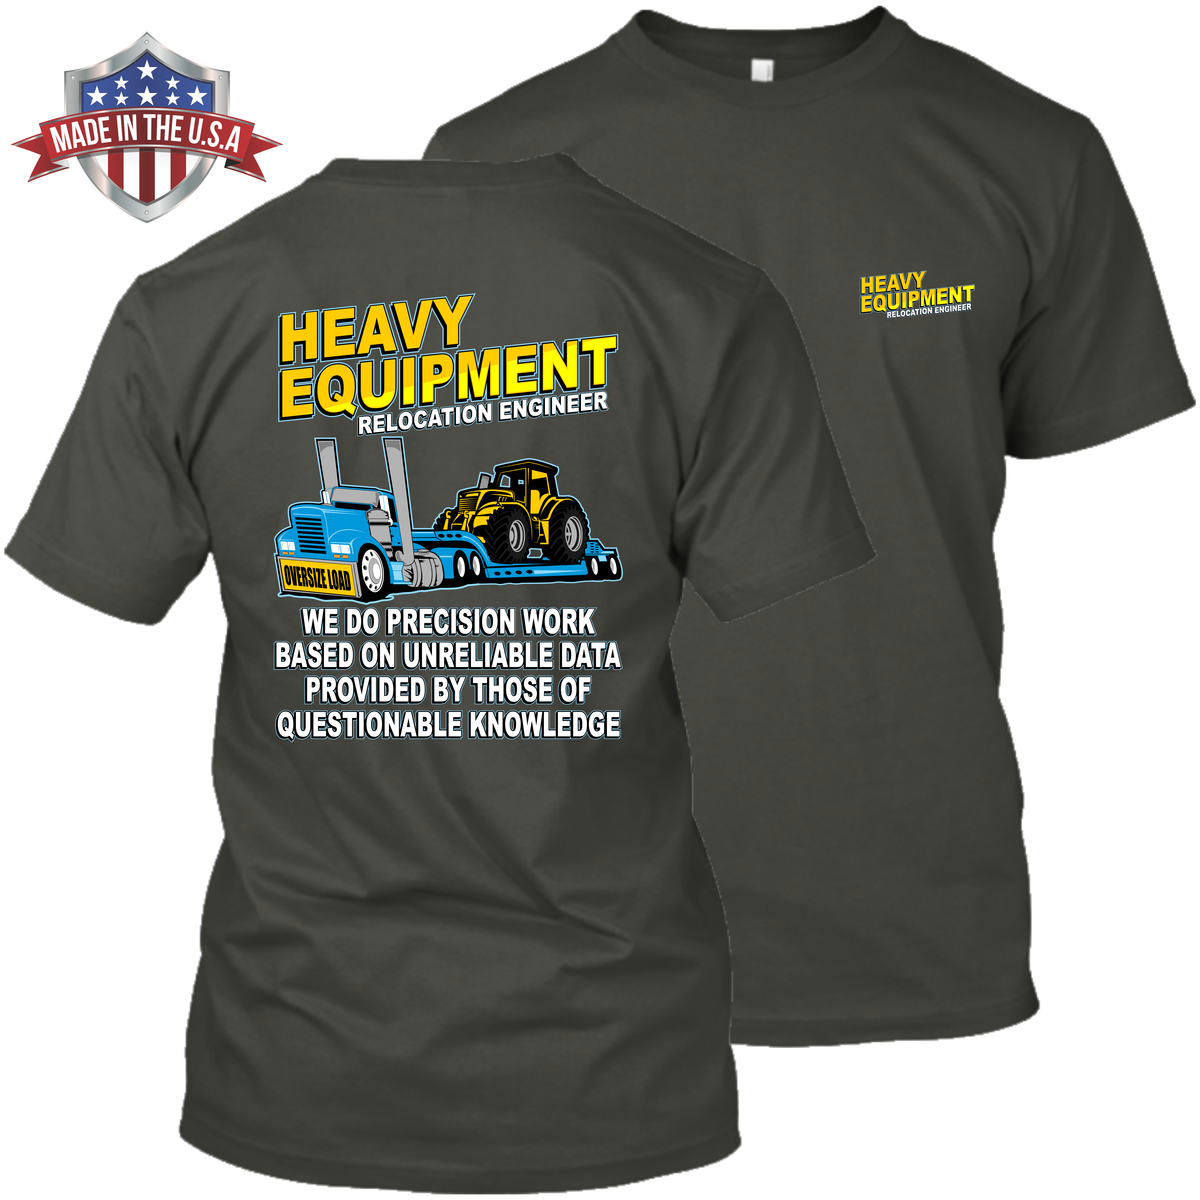 Heavy Equipment Relocation Engineer - Lowboy